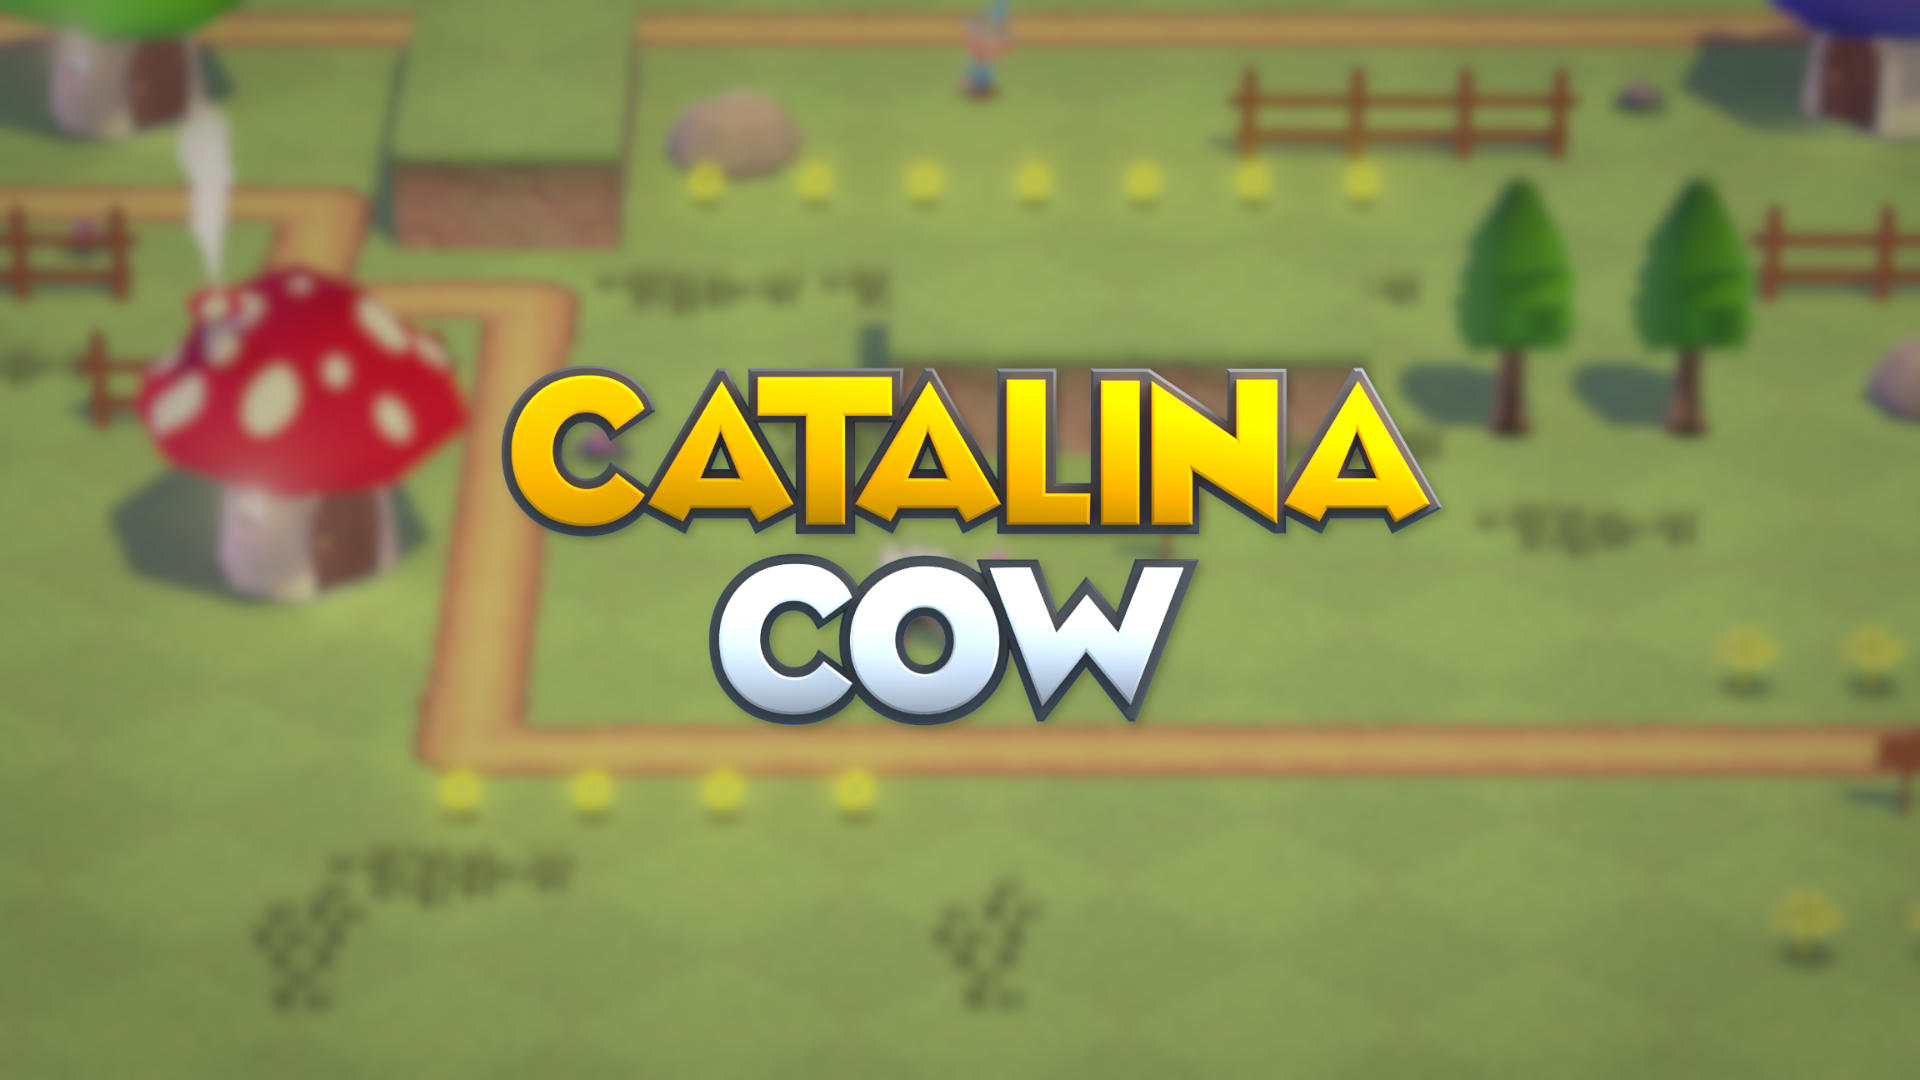 Catalina Cow